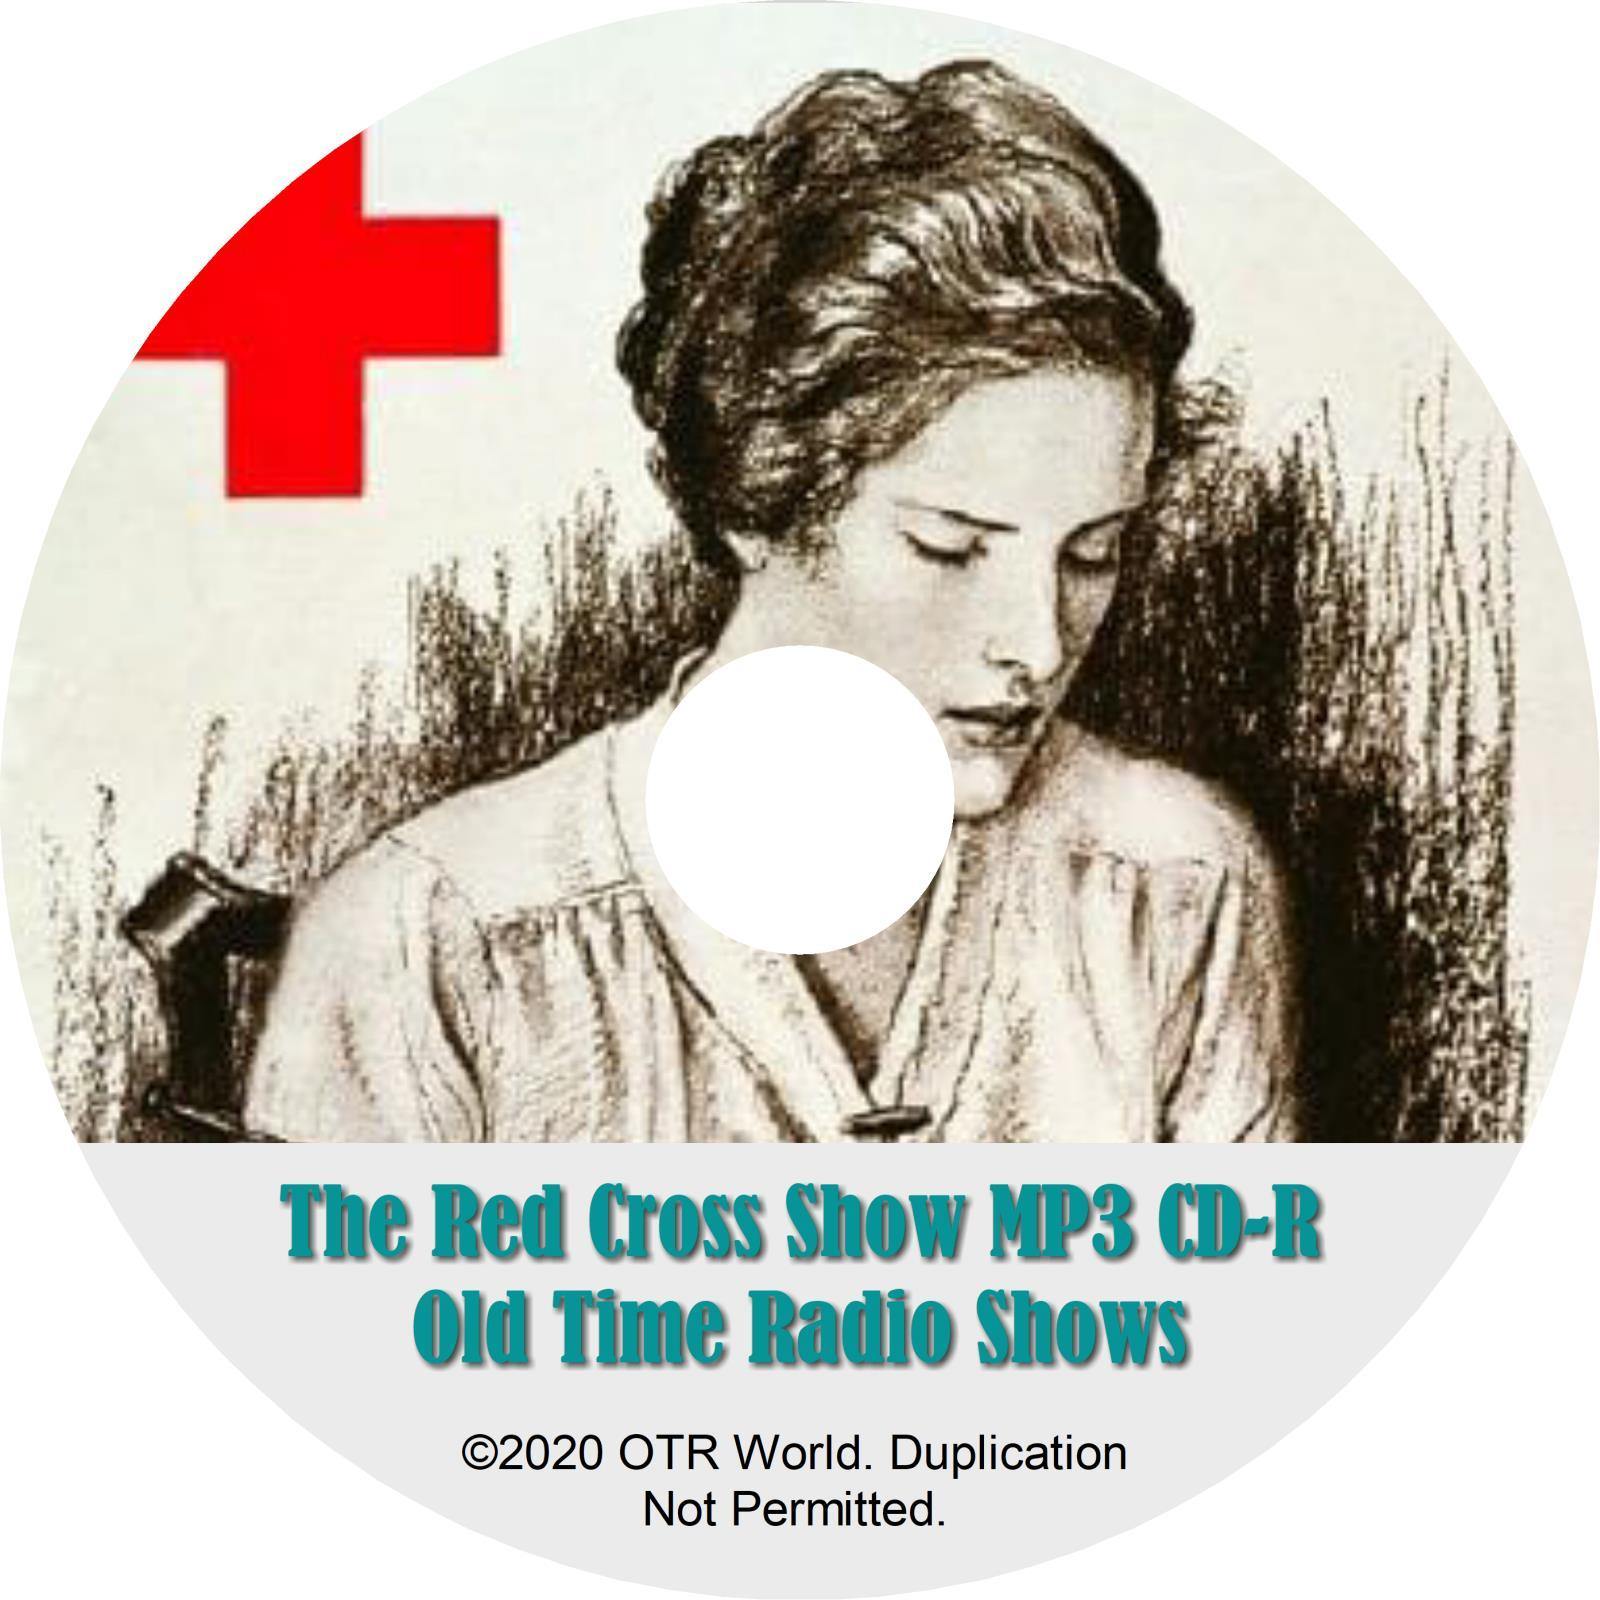 Red Cross OTR OTRS Old Time Radio Shows MP3 CD-R 3 Episodes - OTR World